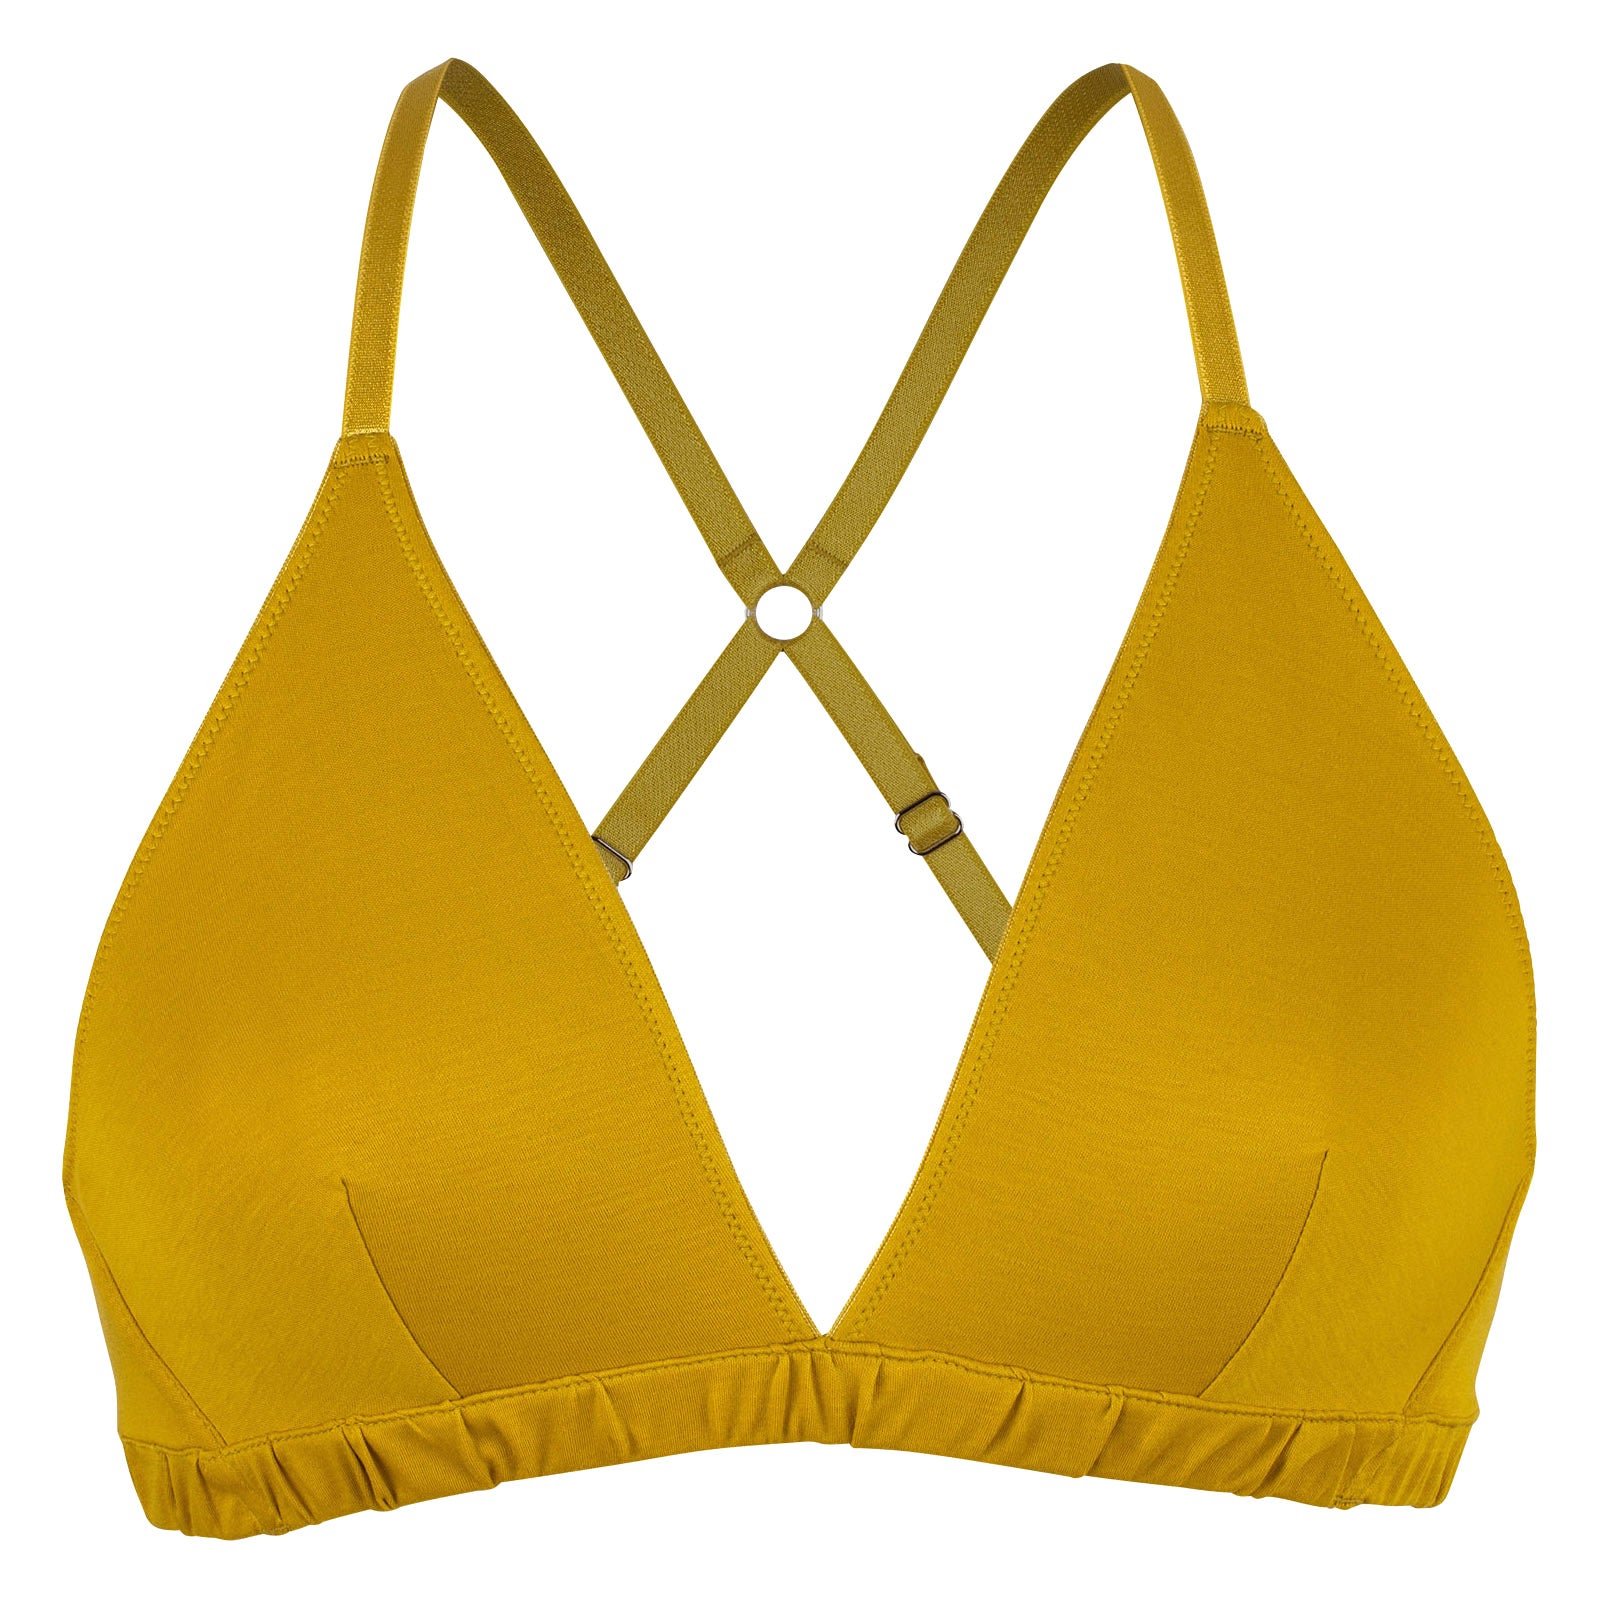 Yellow cotton triangle bra top